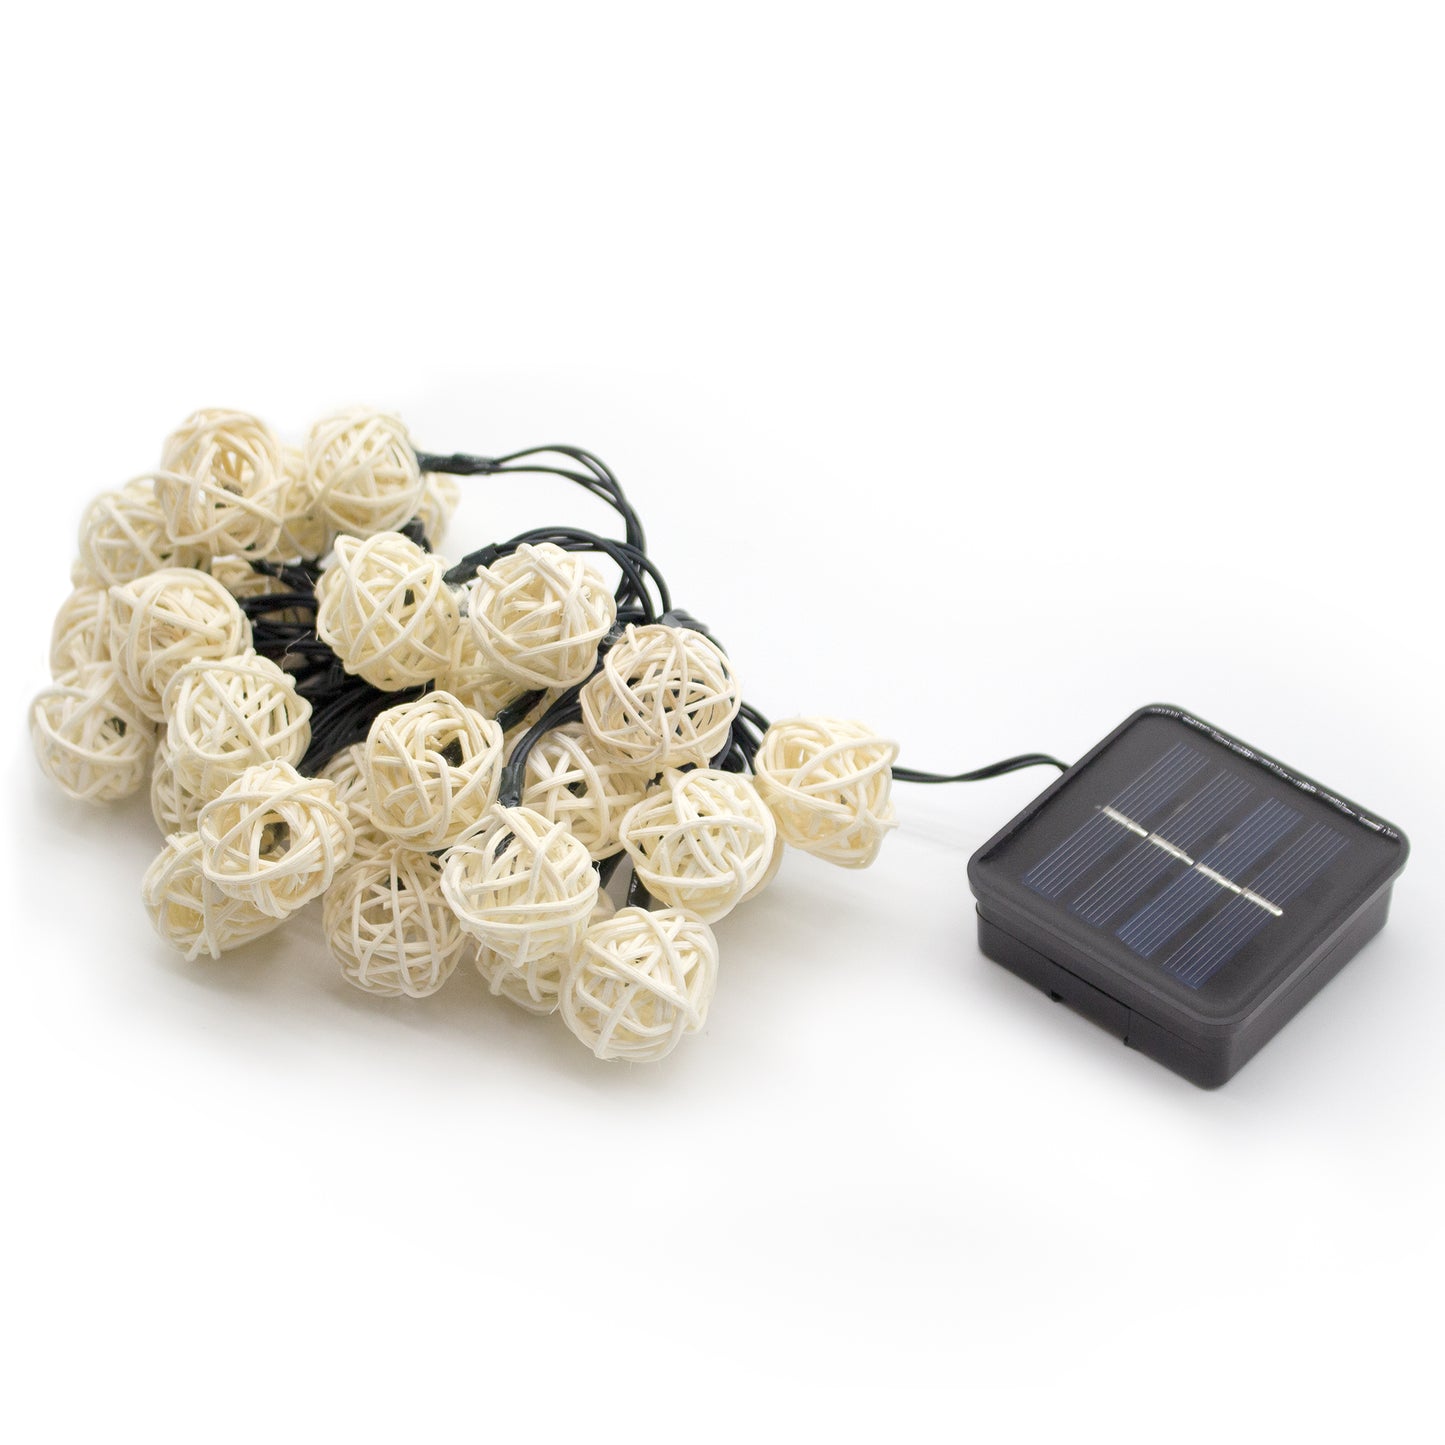 SOLMIRA® Luces Solares LED de Exterior, Forma de Pelota de Ratán, 30 LEDs Cálidas, 8 Modos, Certificado CE y RoHS